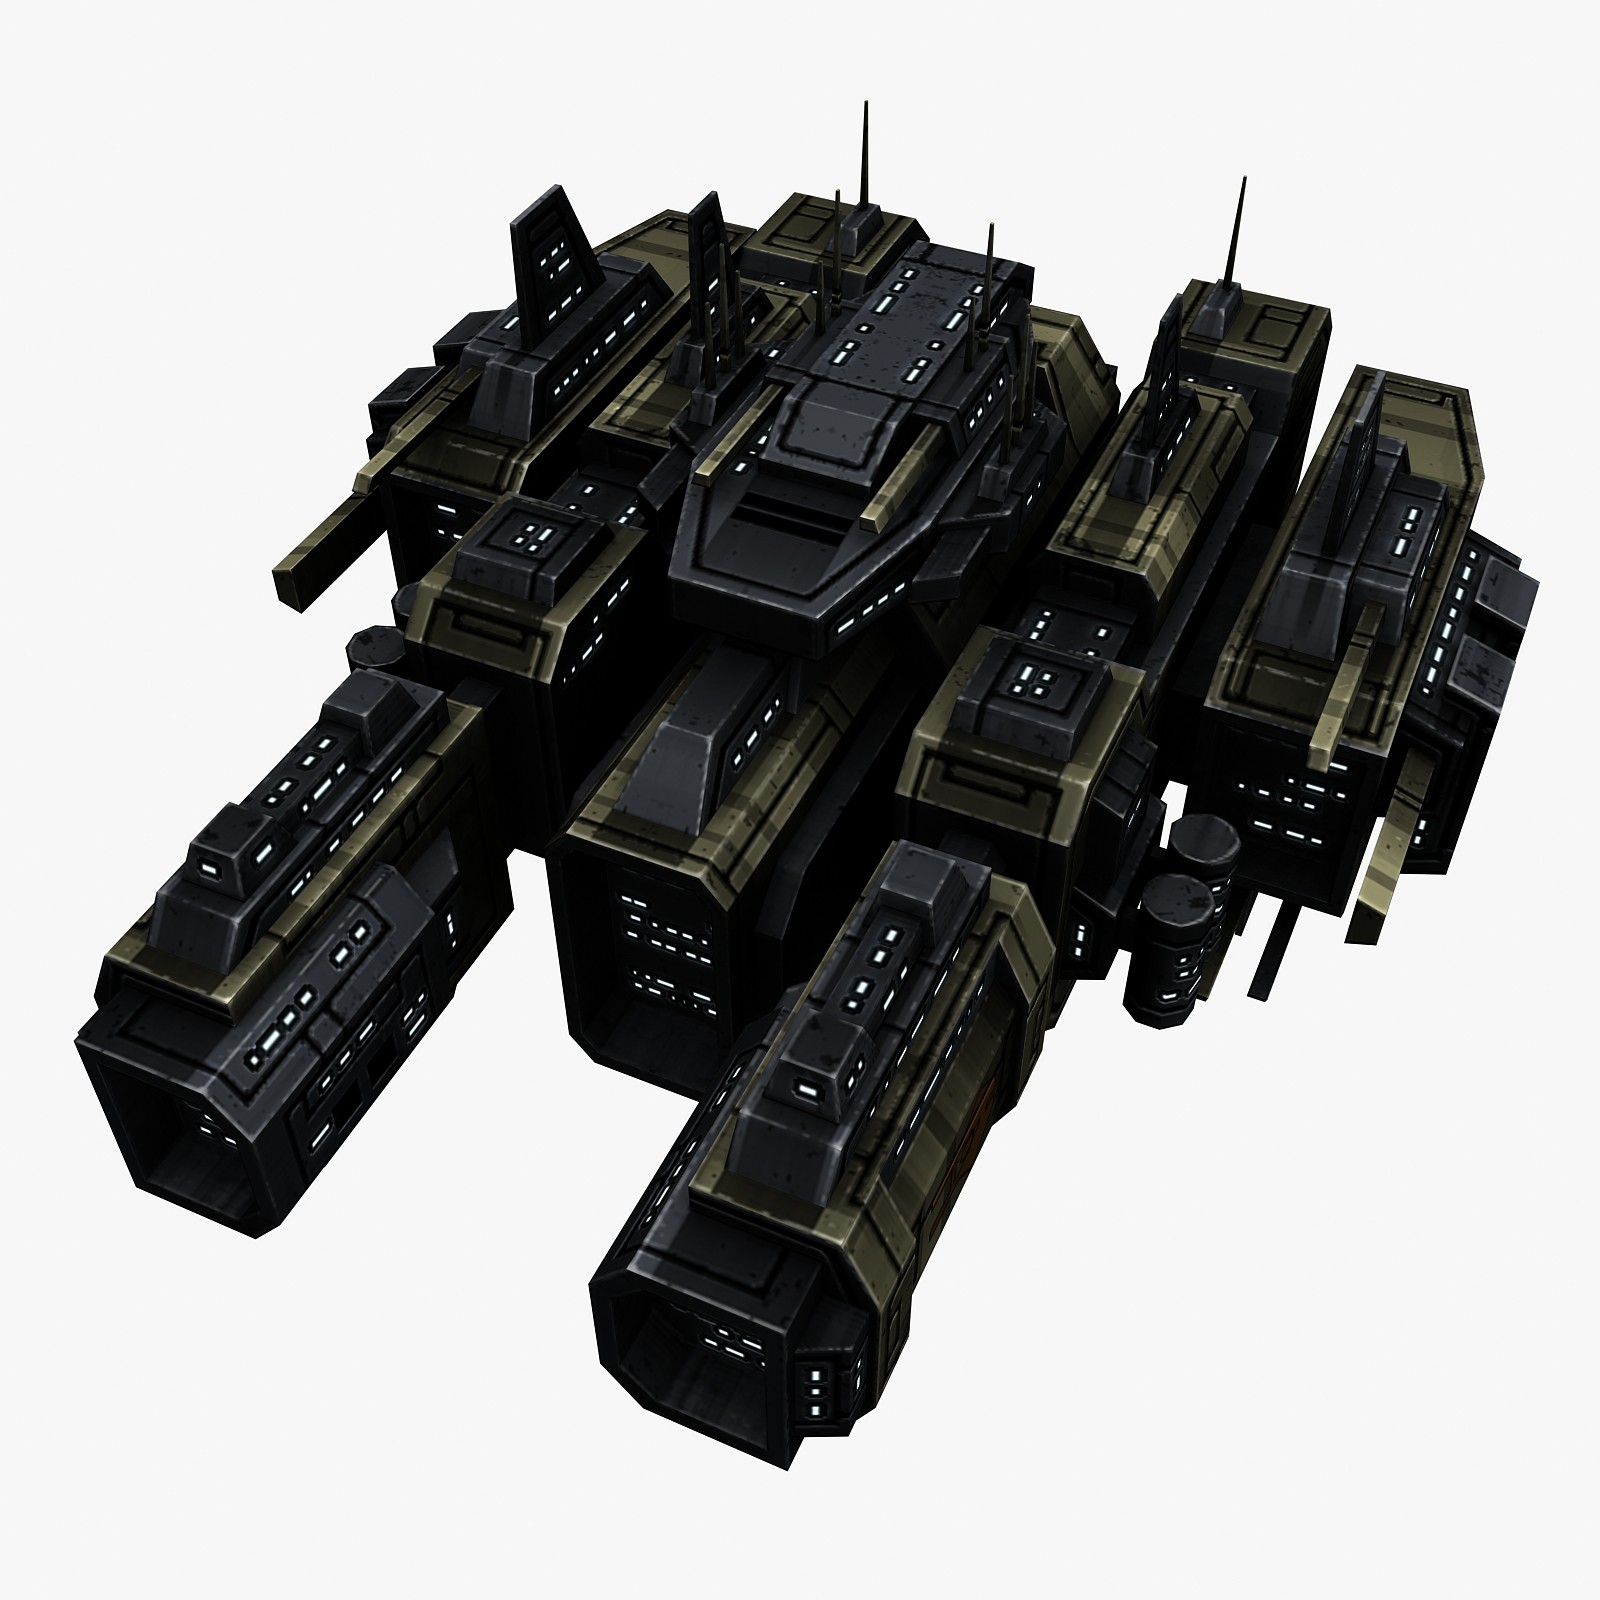 Tag Ship Page No 2 New Battleship Demo Games - astraeus roblox wikia fandom powered by wikia